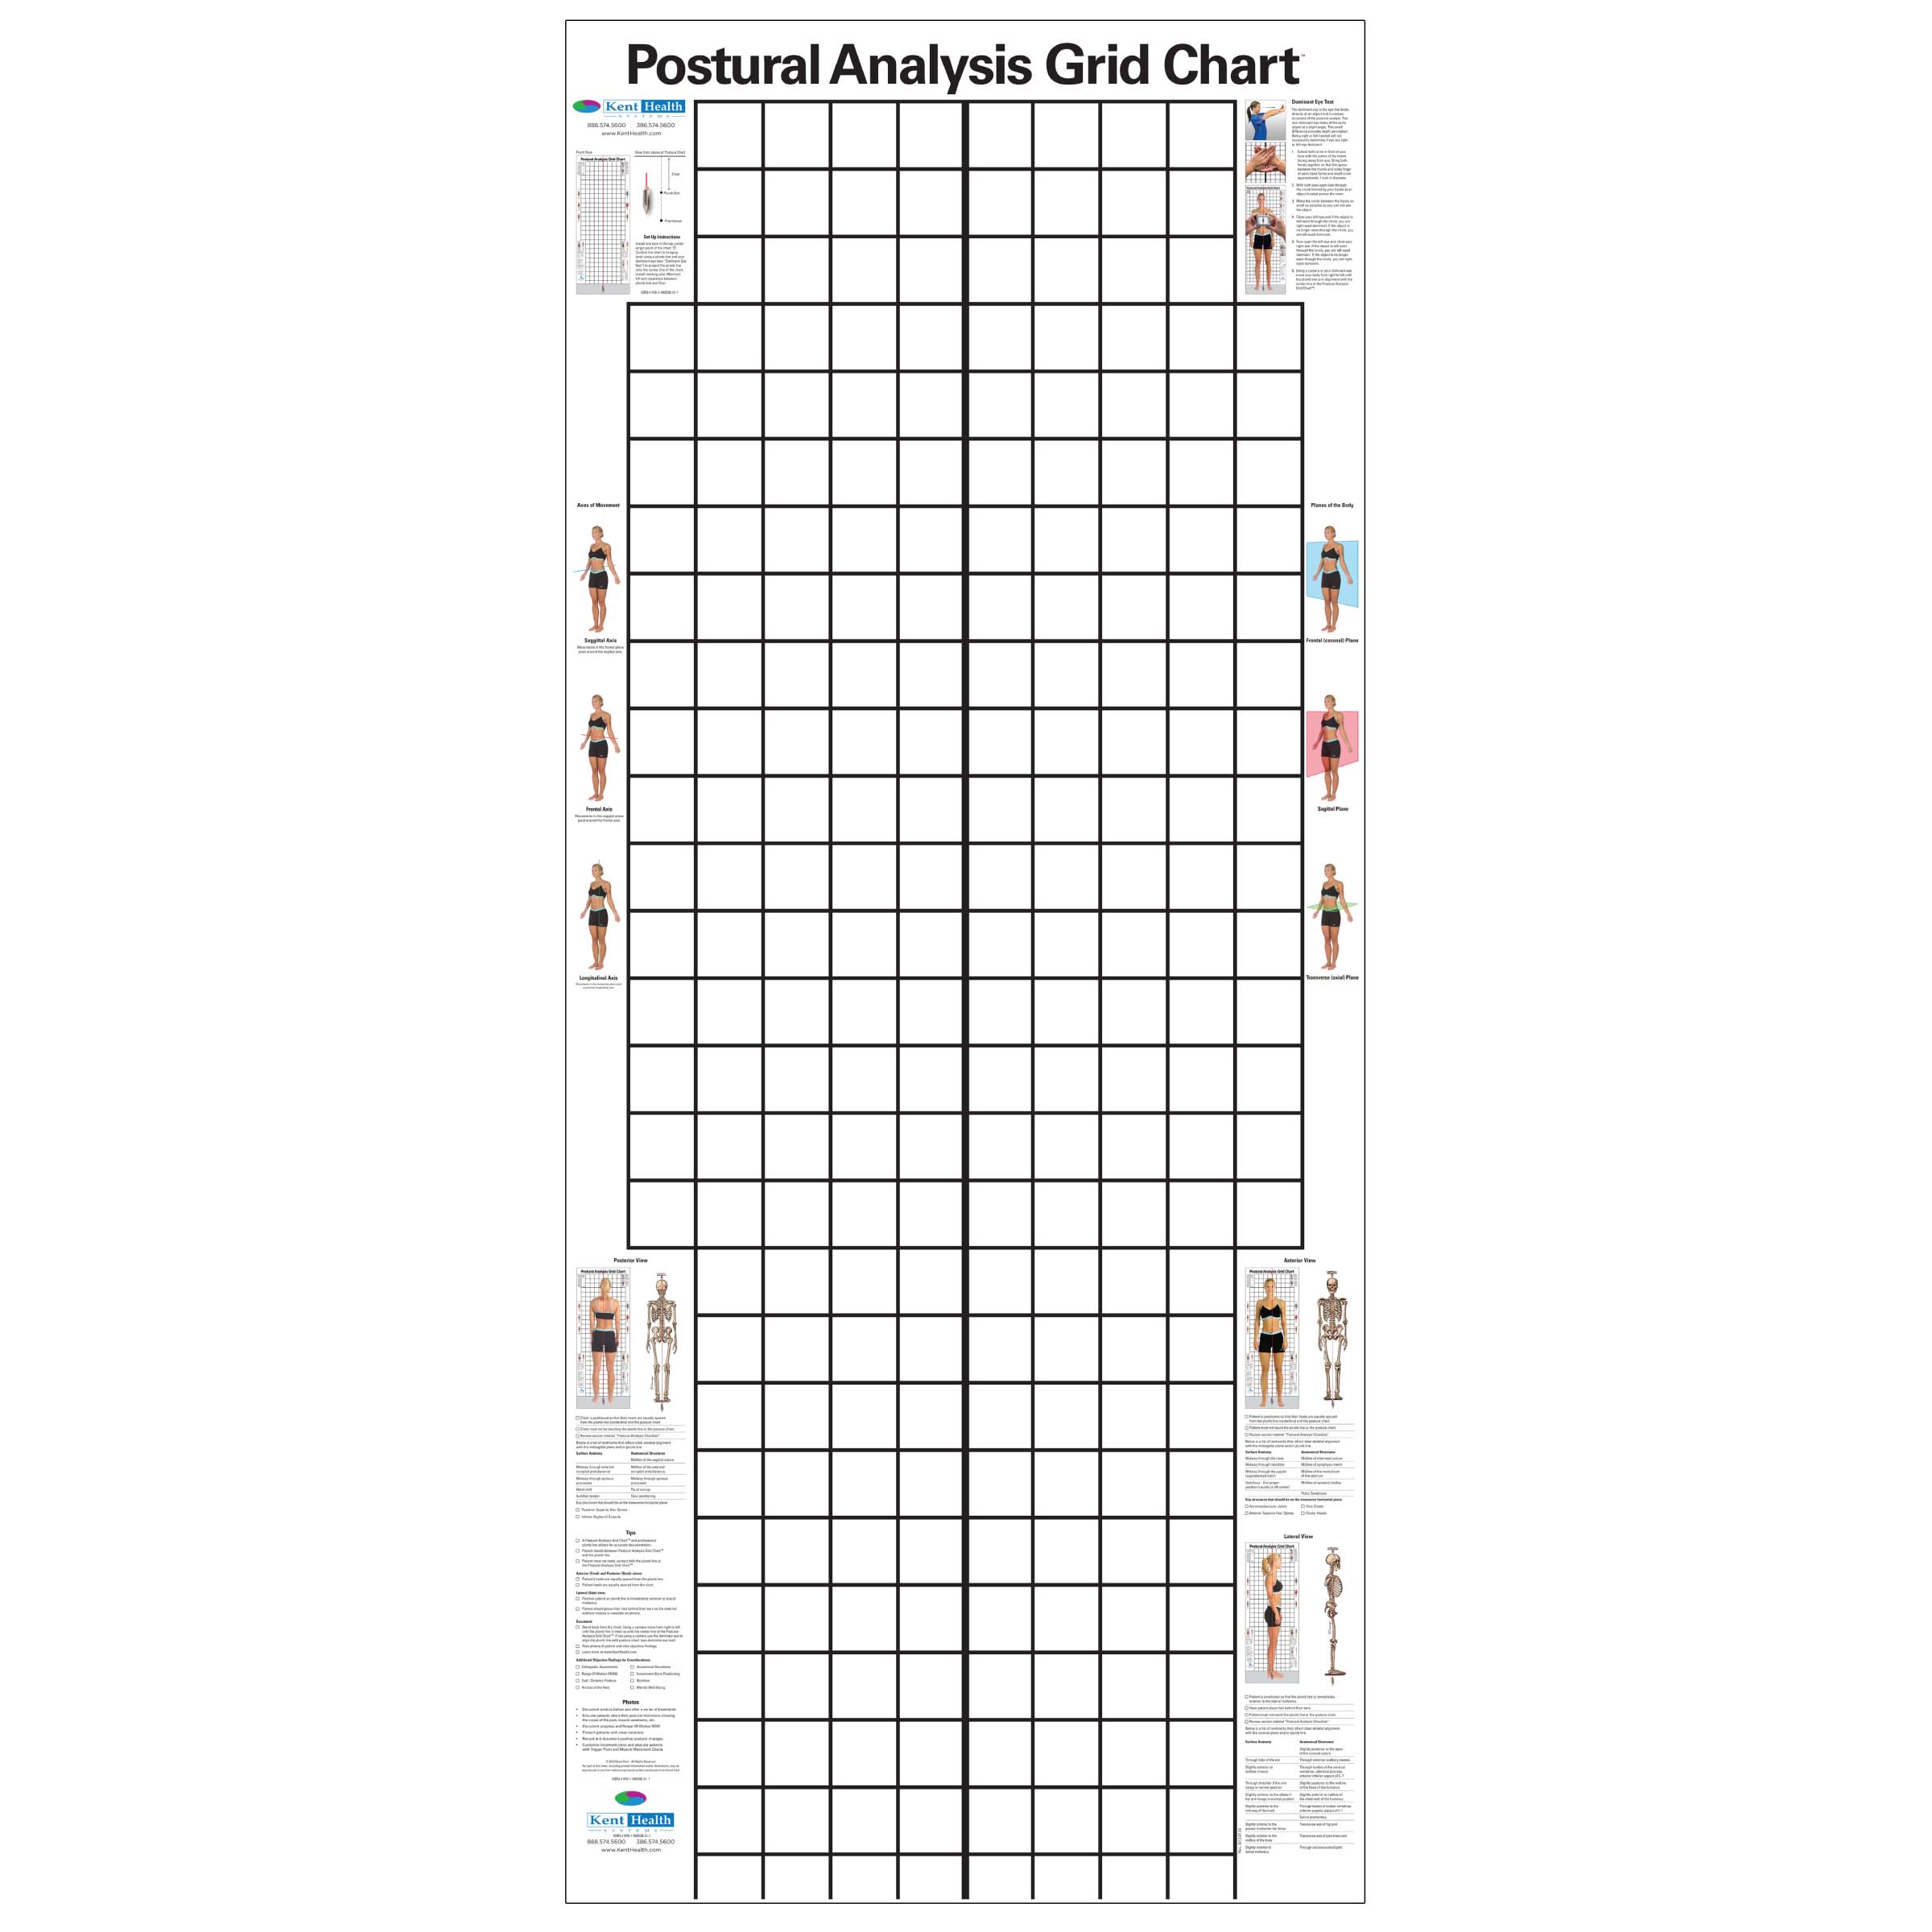 Postural Analysis Grid Chart